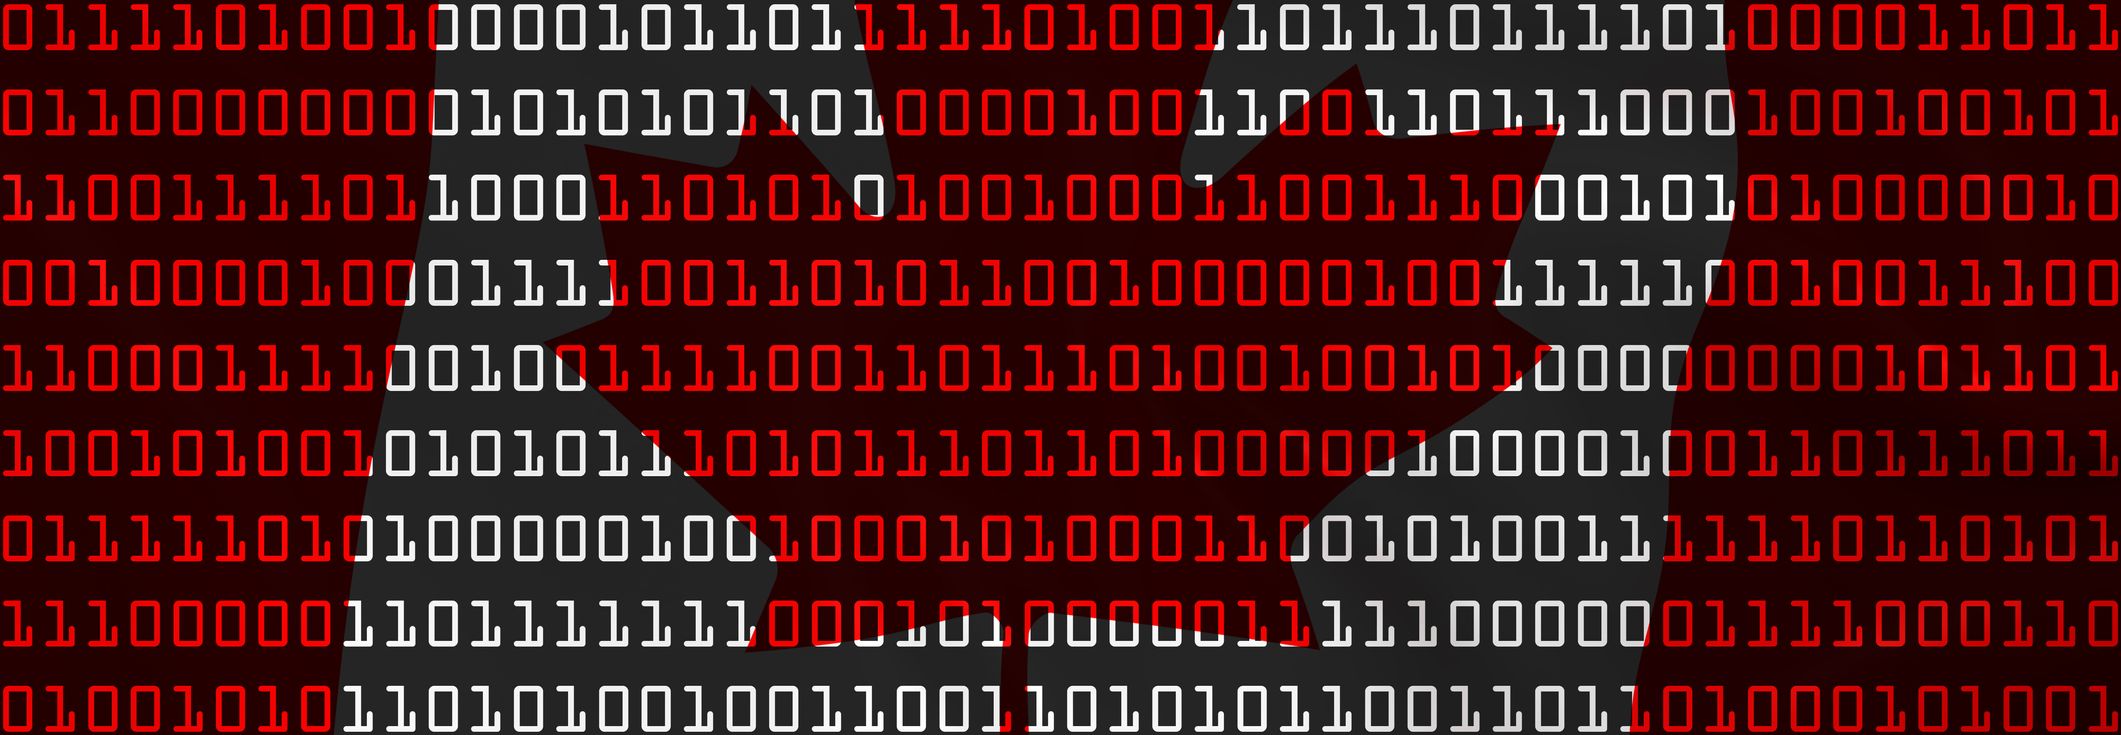 NoName057(16) frappe le Canada avec des attaques DDoS